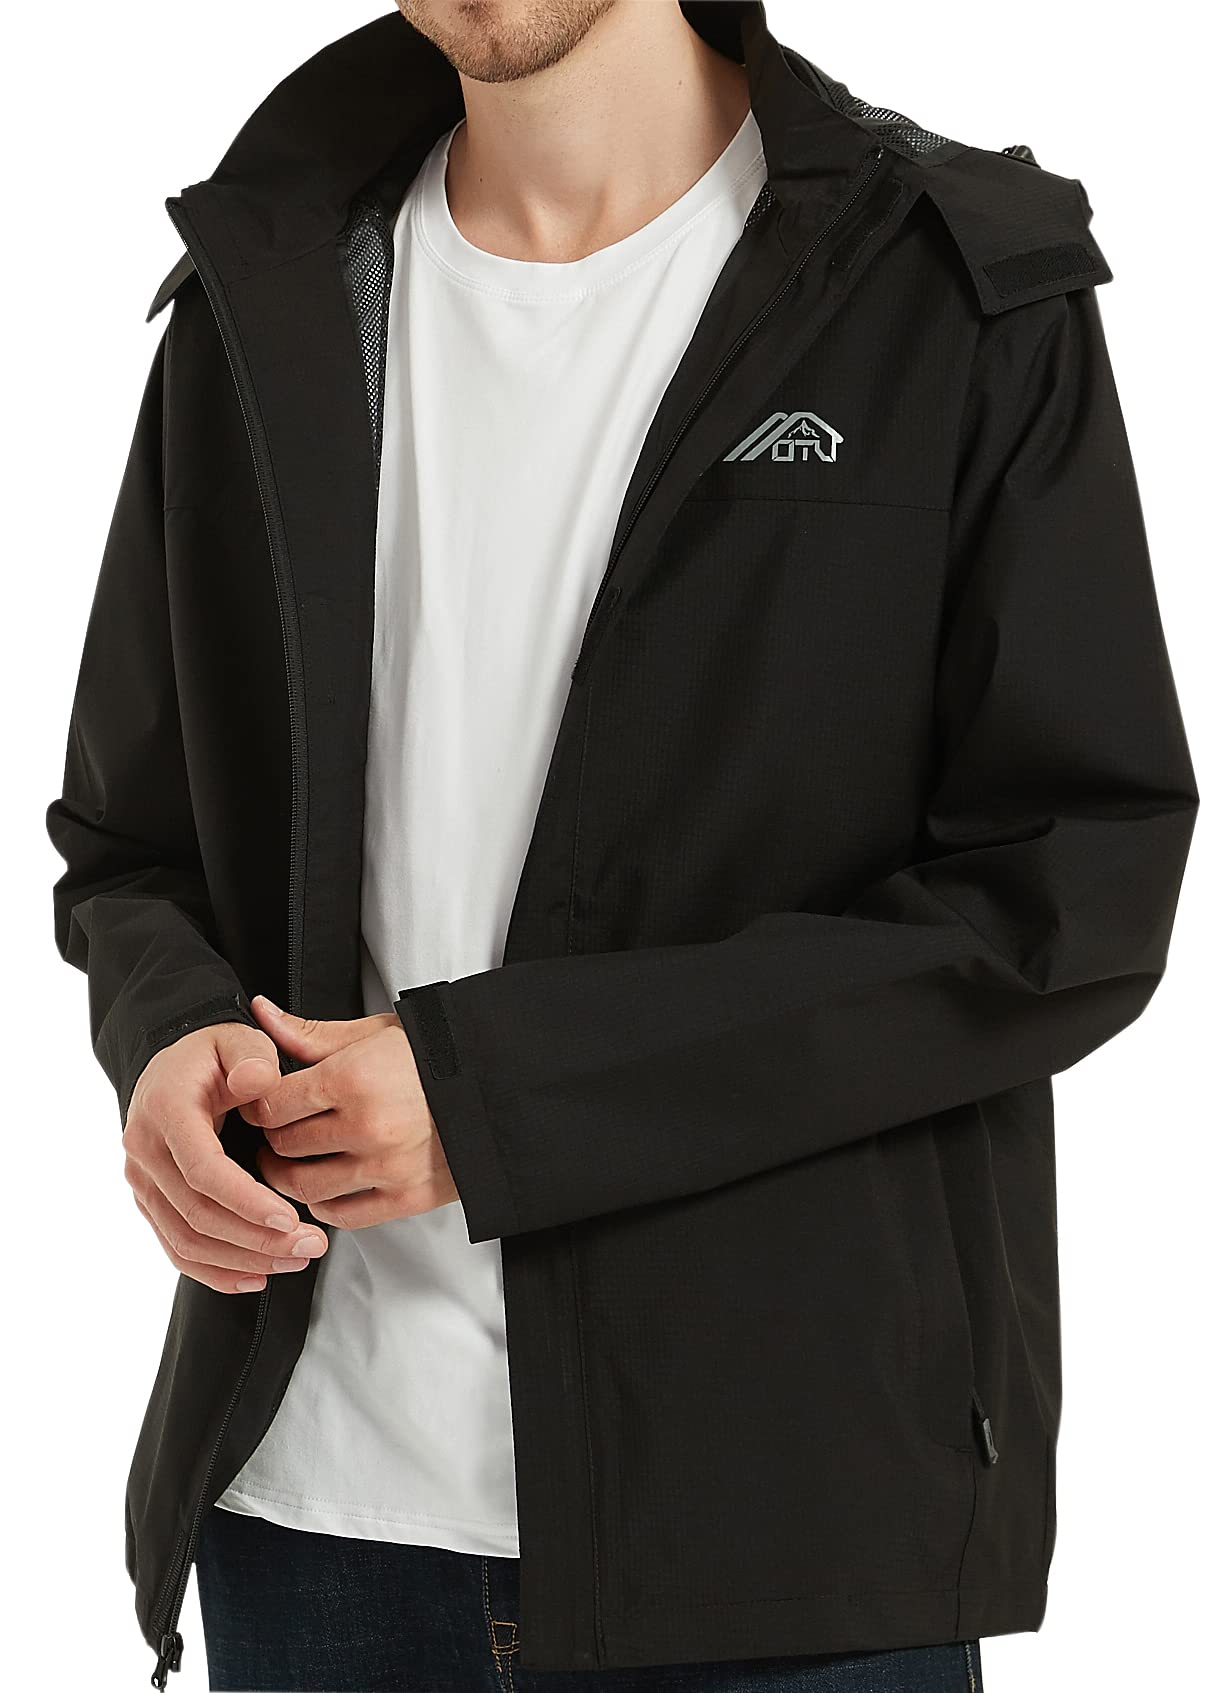 OTU Men's Lightweight Waterproof Hooded Rain Jacket Outdoor Raincoat Shell Jacket for Hiking Travel